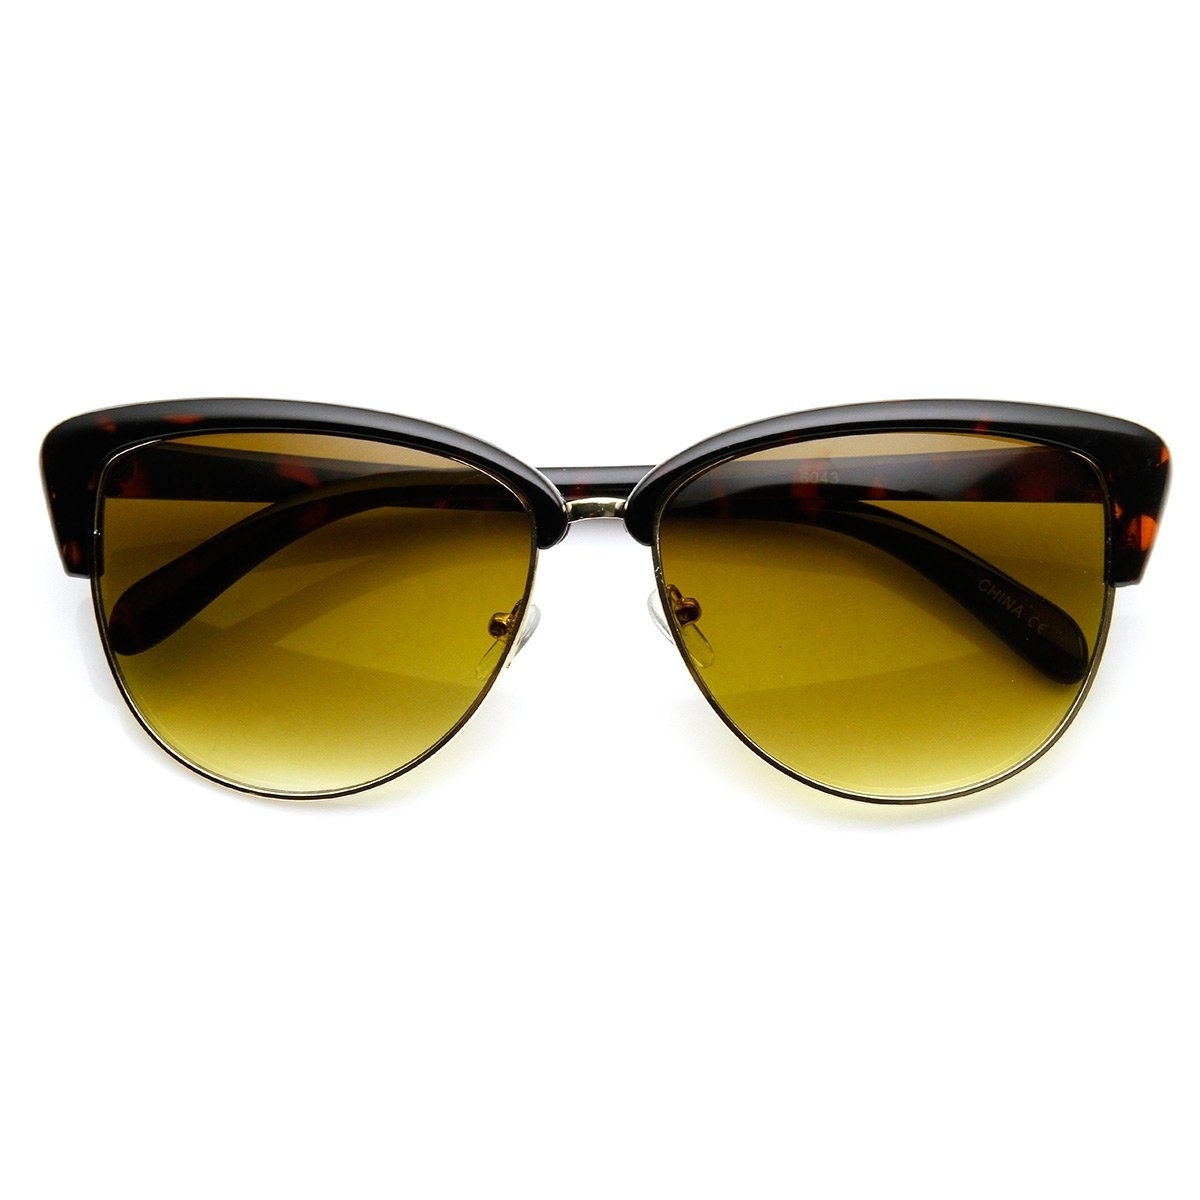 Womens Fashion Half Frame Butterfly Bow Tie Cat Eye Sunglasses - Tortoise-Gold